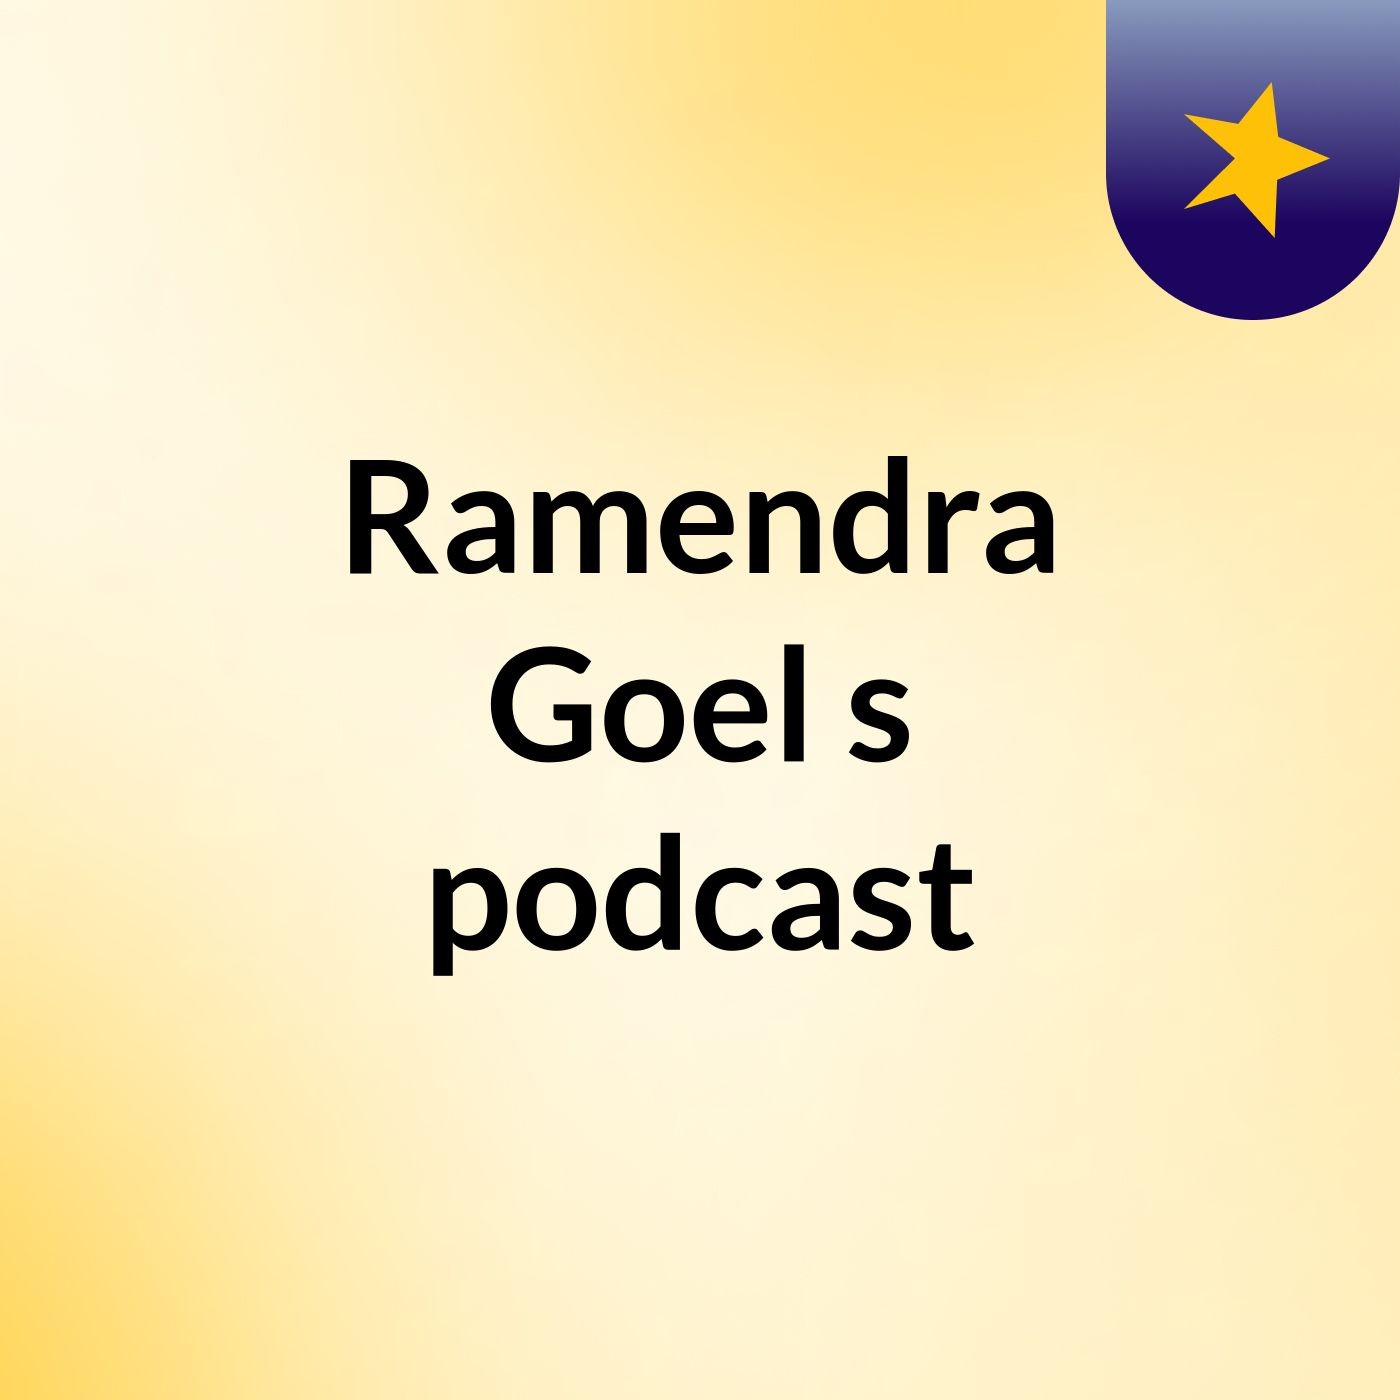 Ramendra Goel's podcast